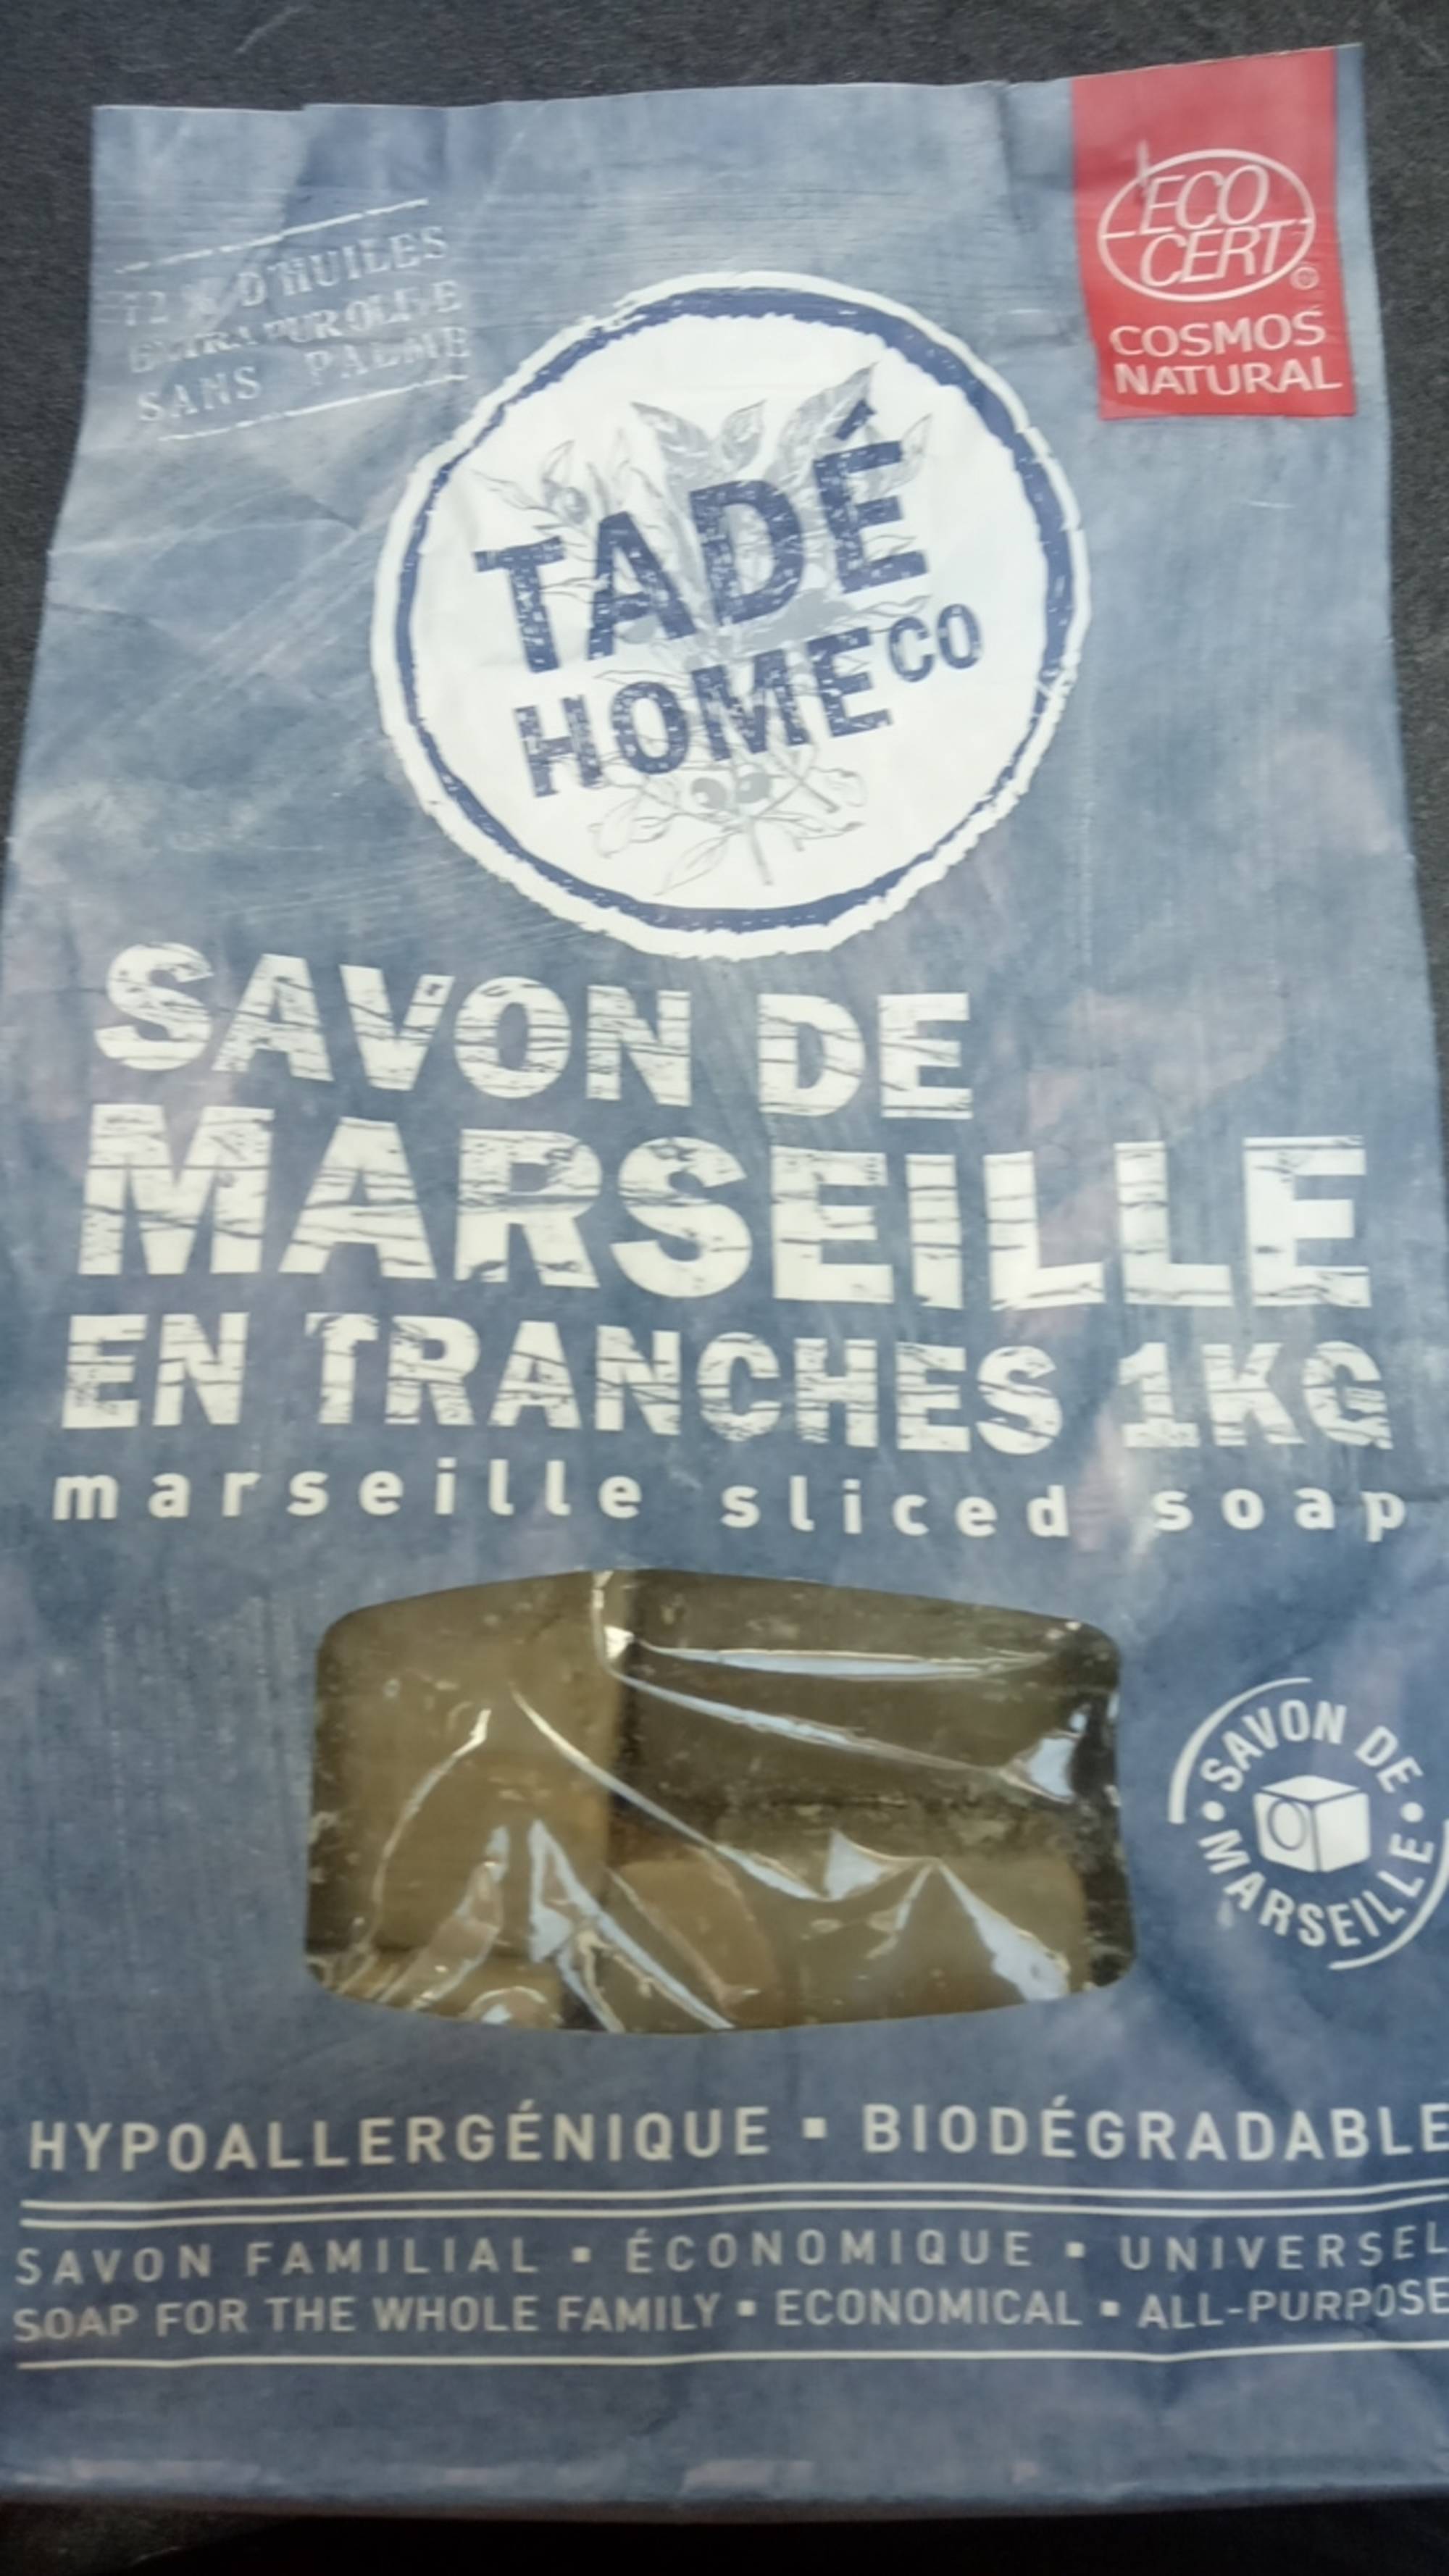 TADÉ HOME CO - Savon de Marseille